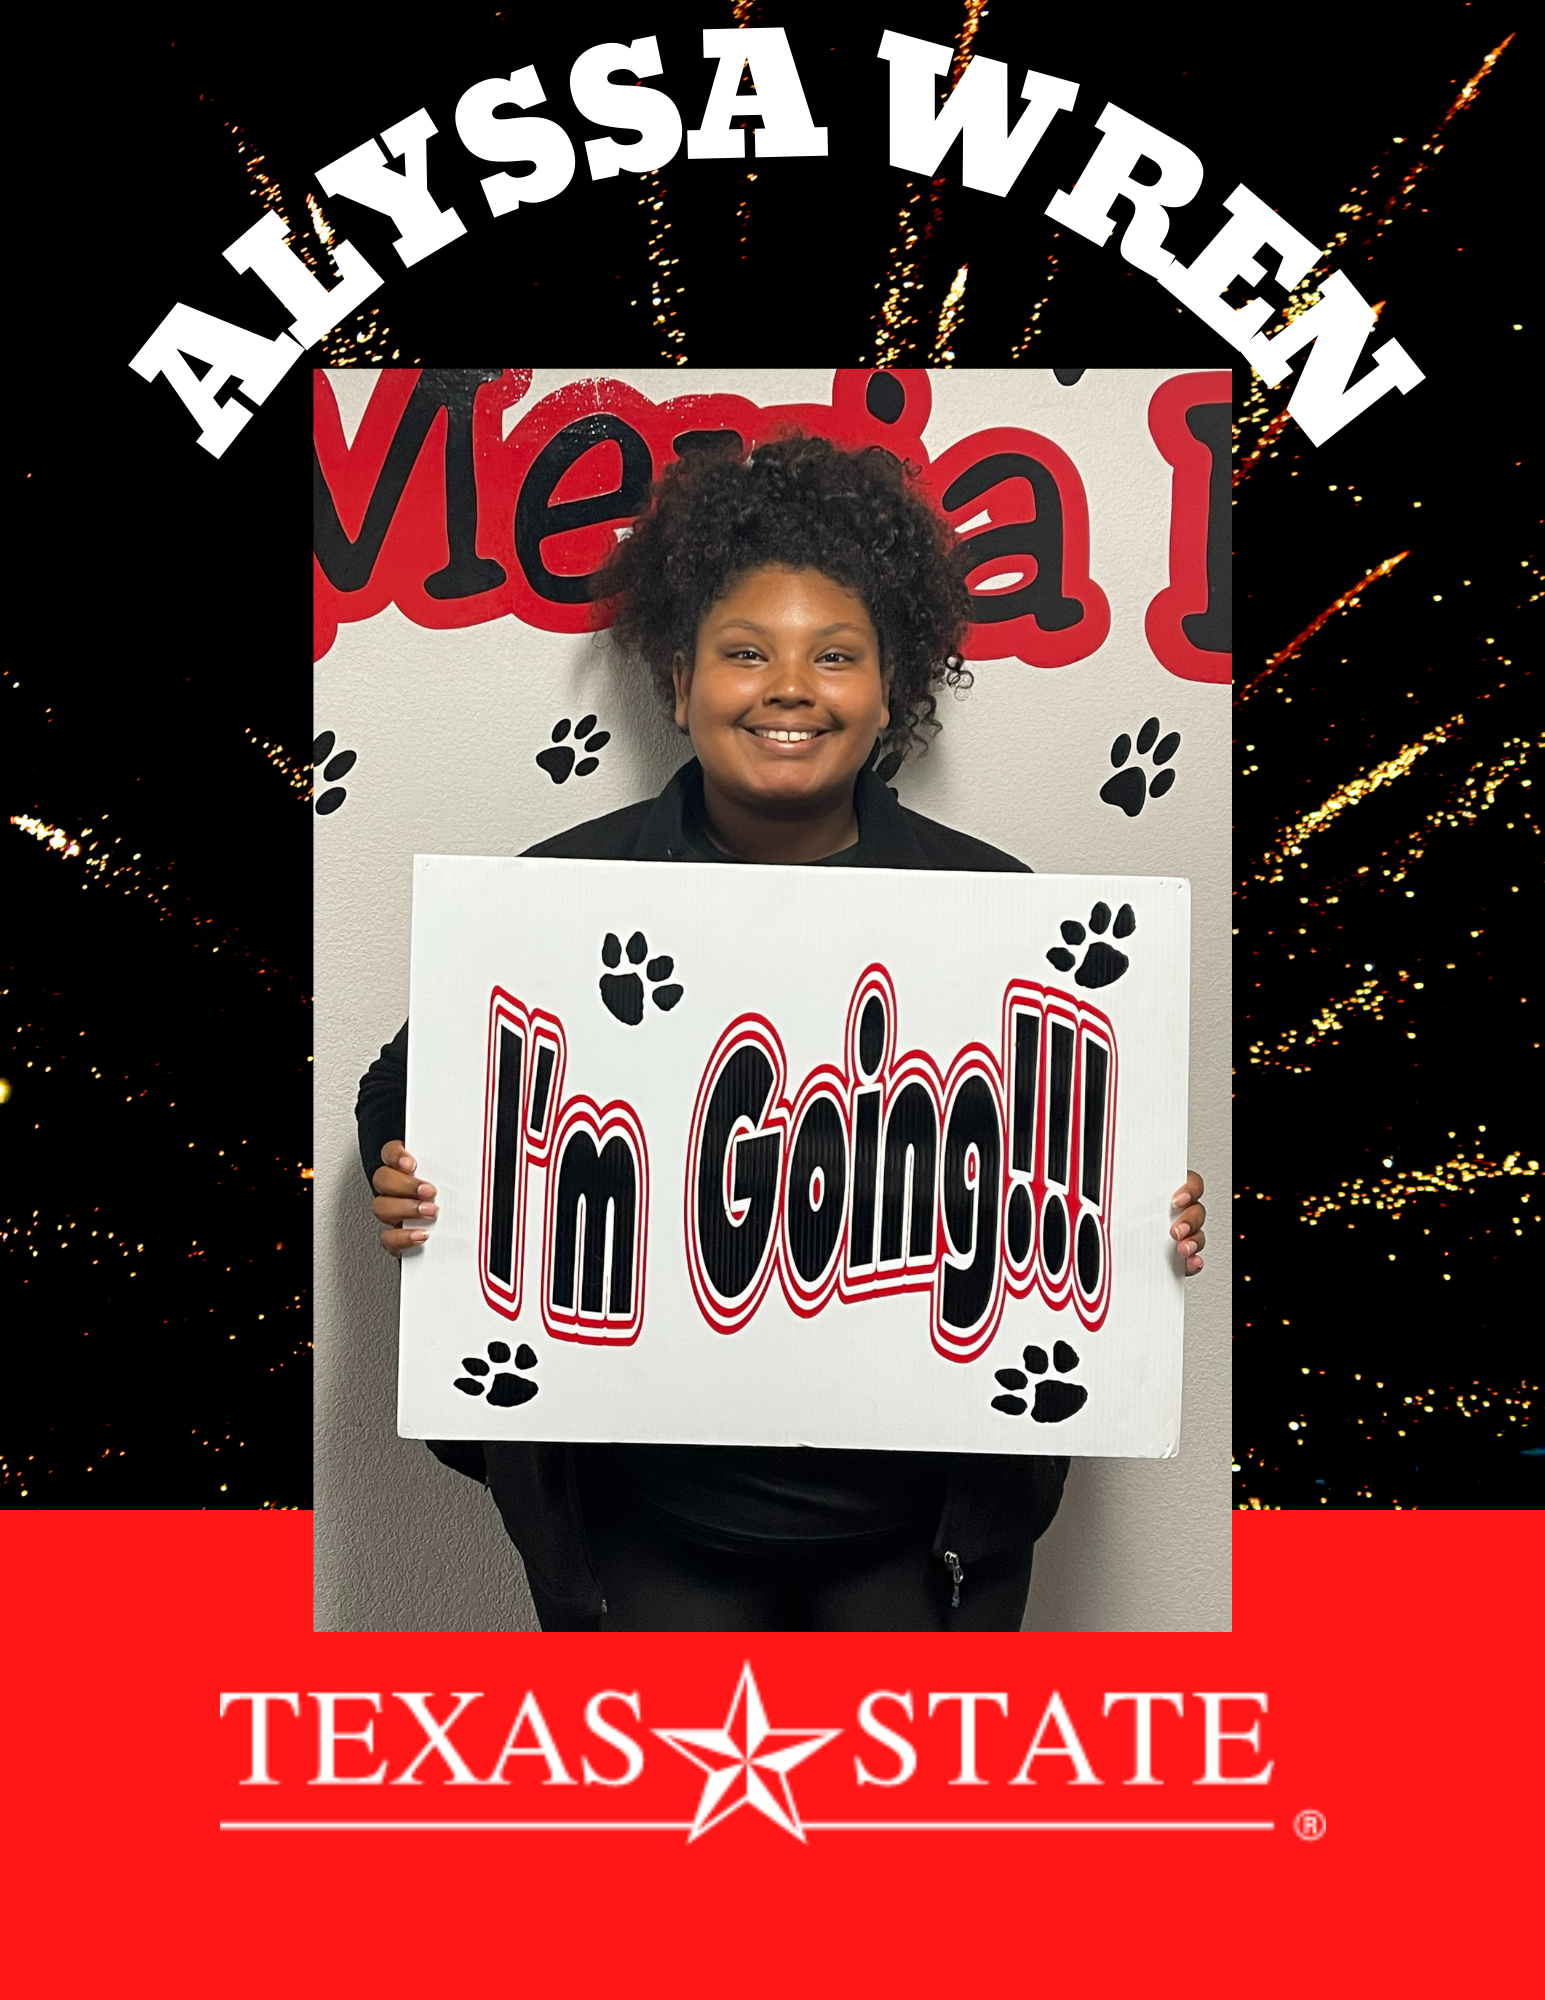 Alyssa Wren - I'm Going! - Texas State